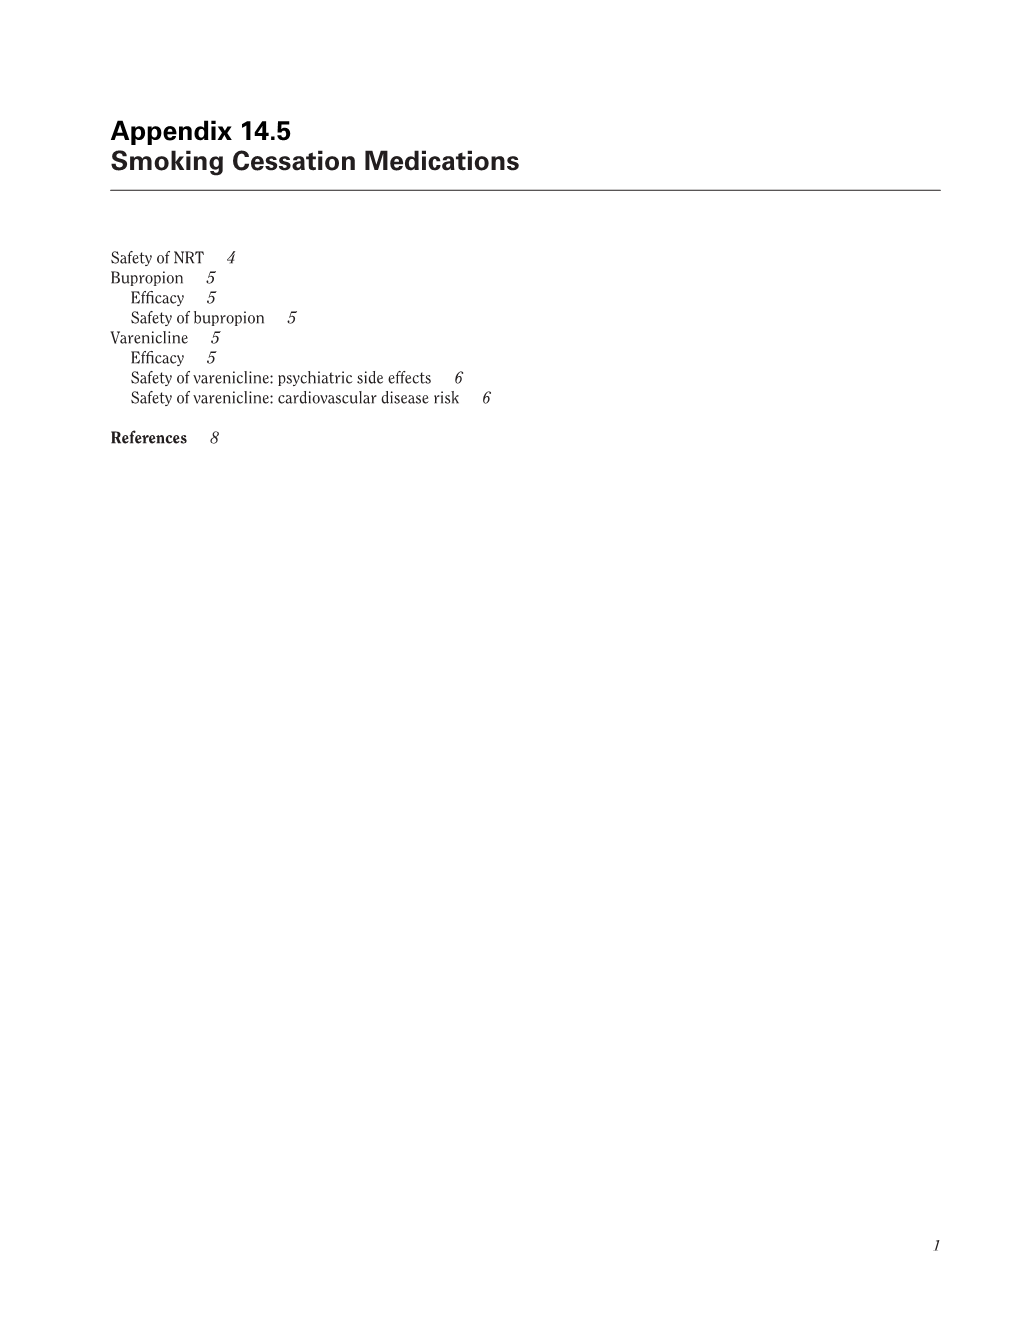 Chapter 14 Appendix 14.5 Smoking Cessation Medications